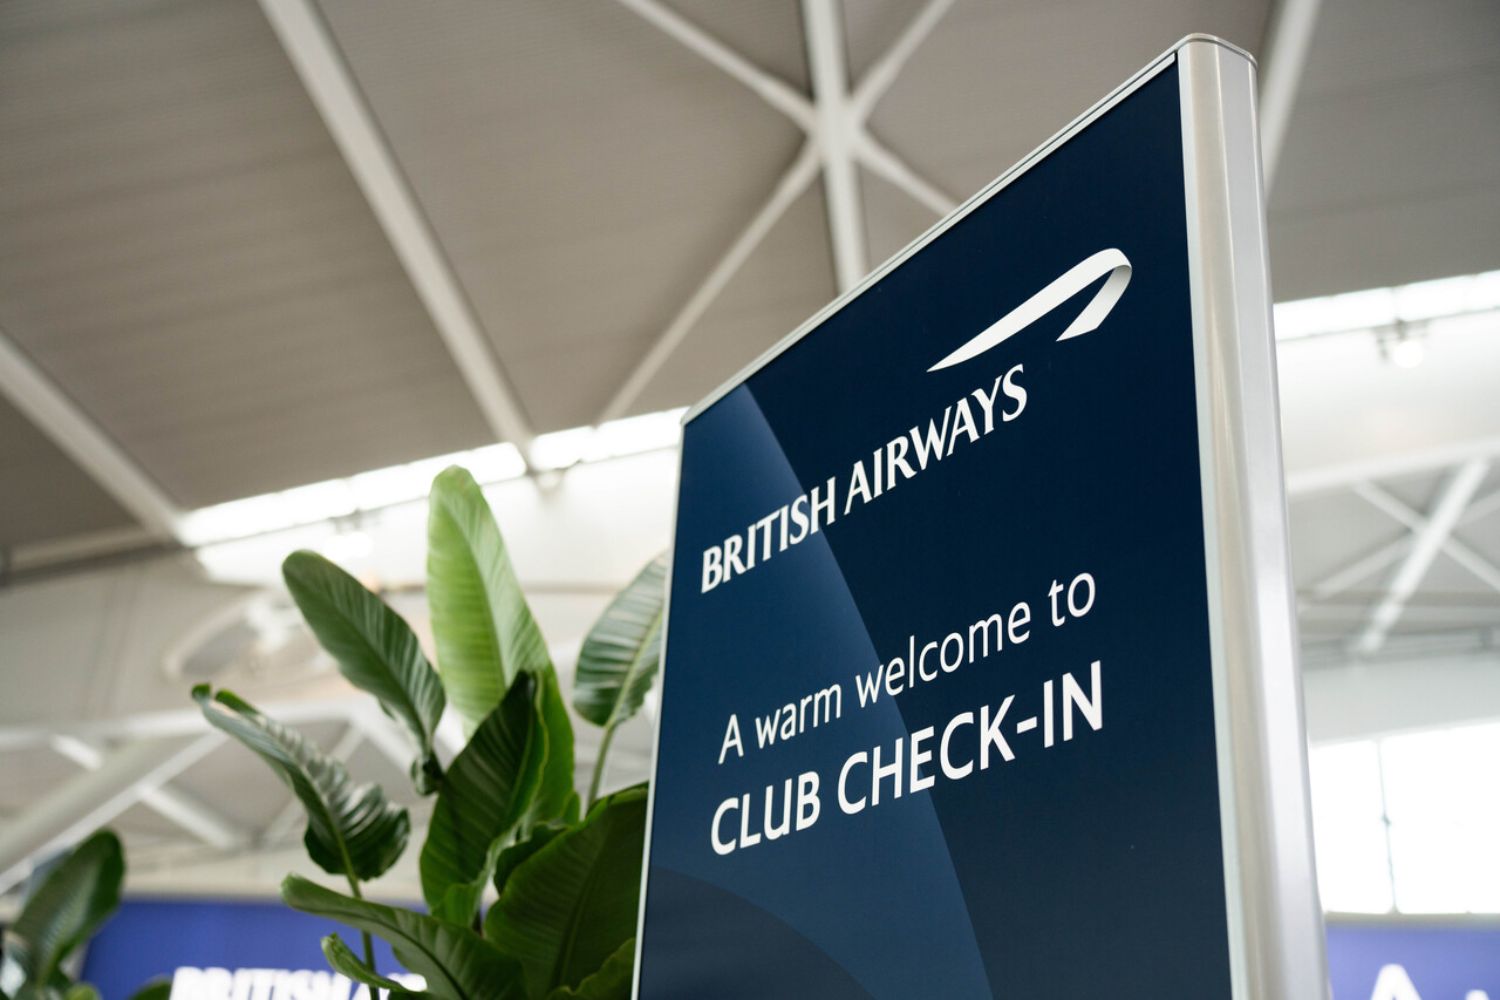 BA Heathrow - New BA First lounge refurb Check - in